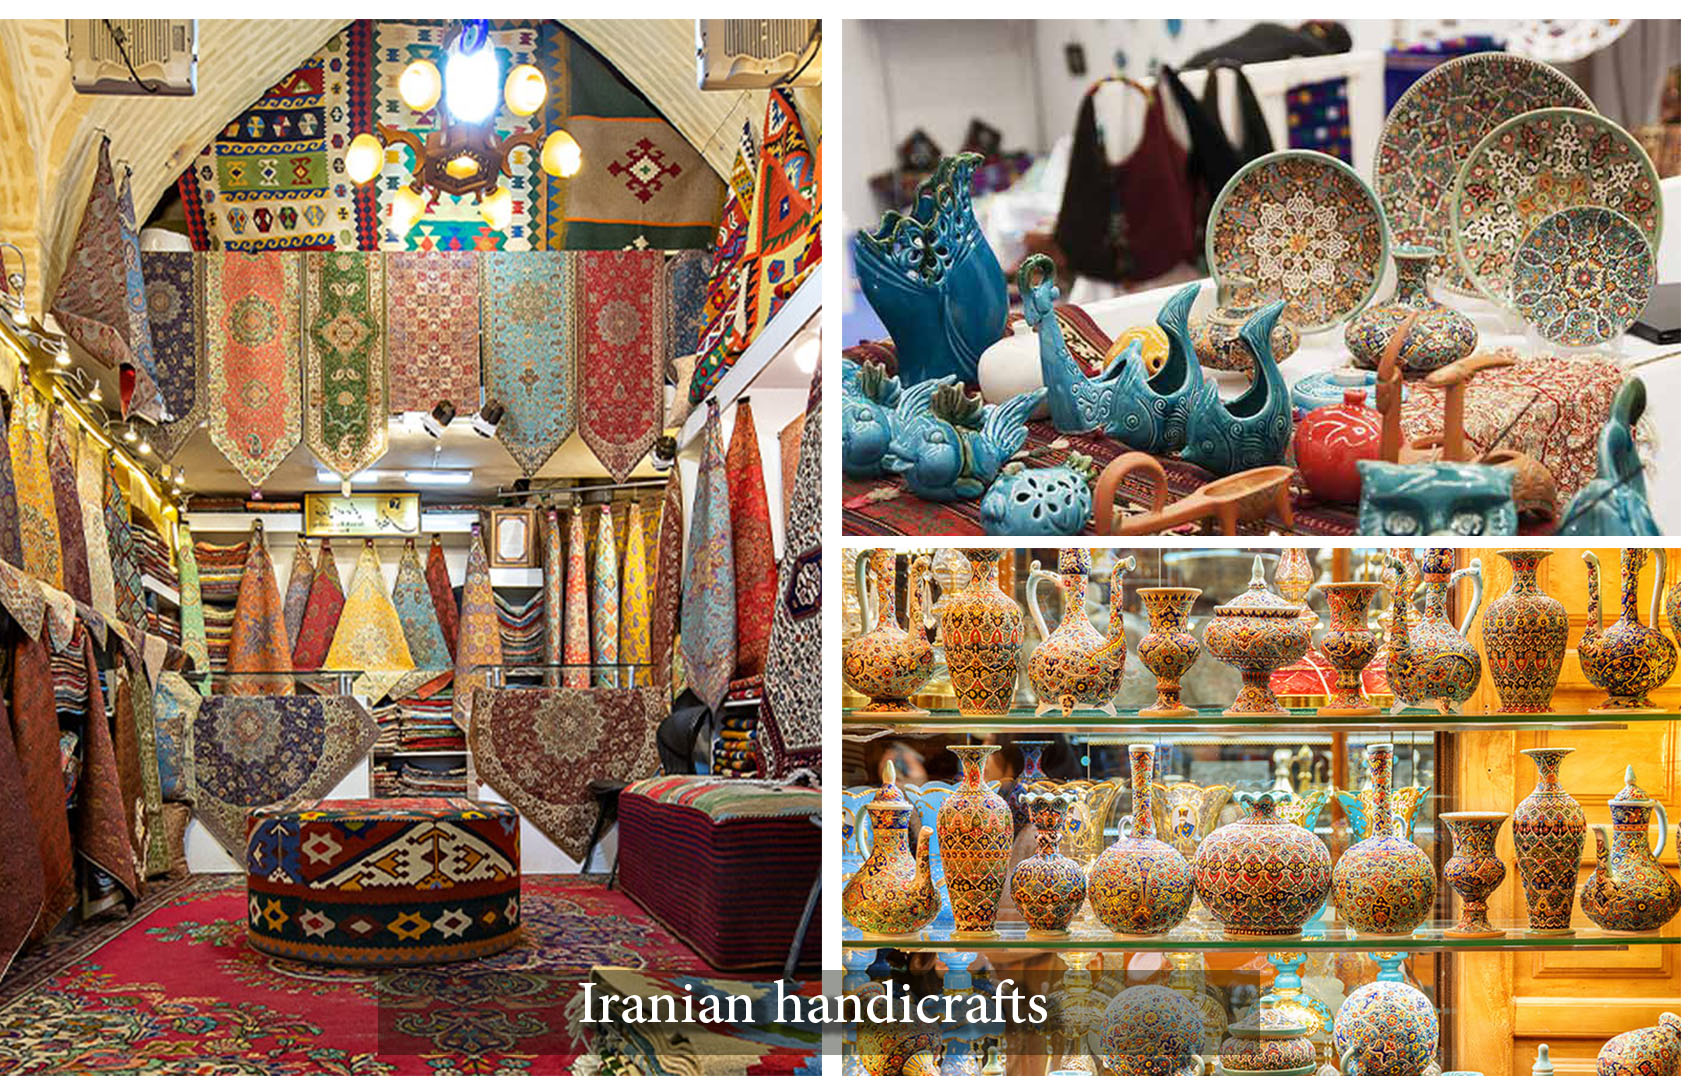 travel to Iran for: Iranian handicrafts